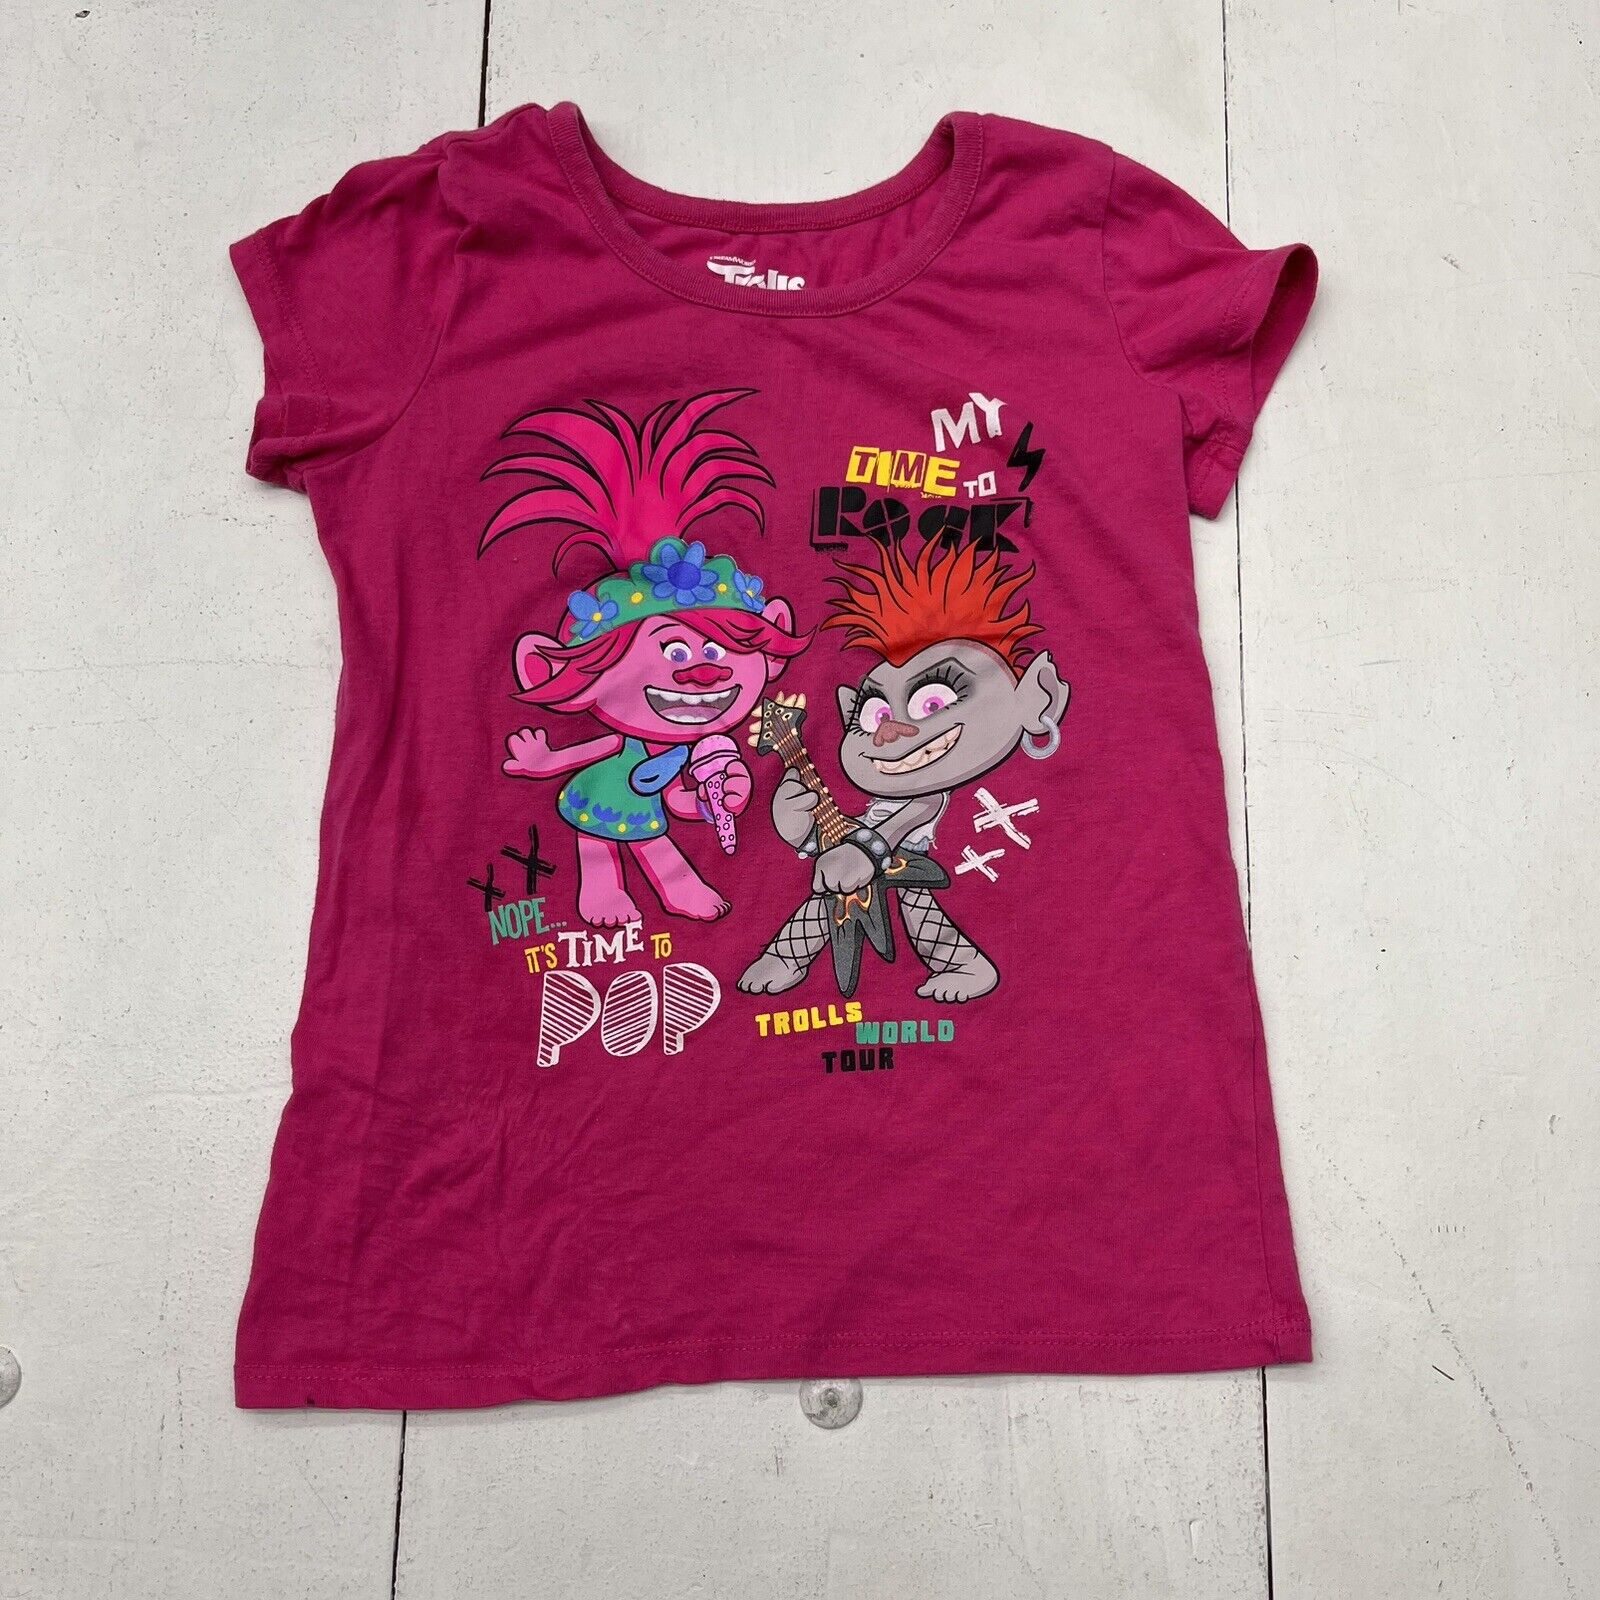 DreamWorks Trolls Pink Graphic Print T-Shirt Girls Size 10/12